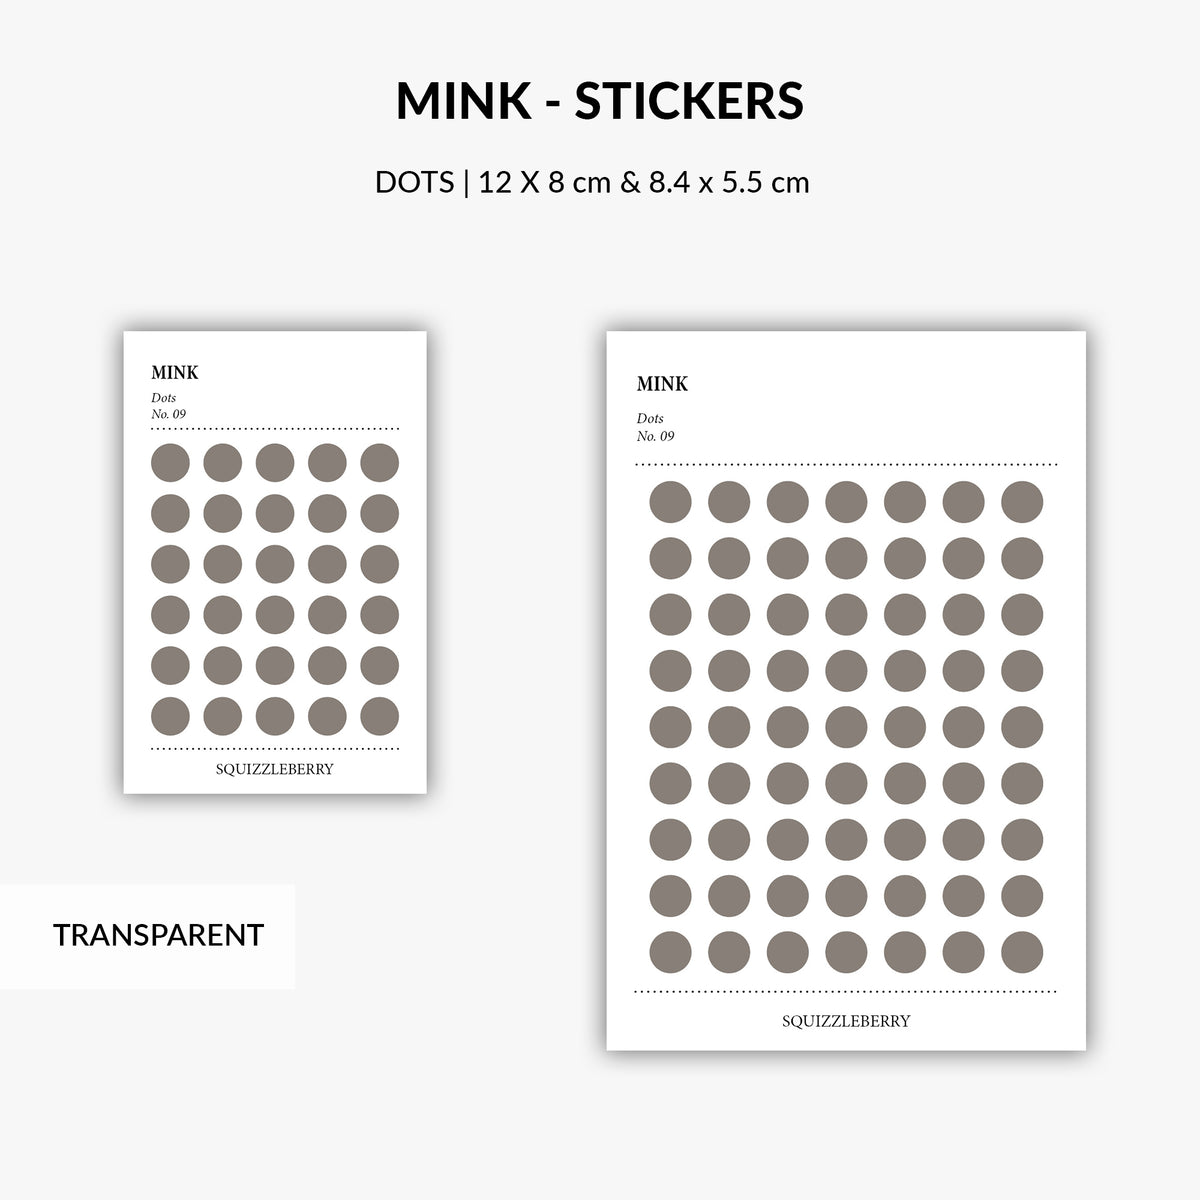 mink sticker dots in transparent